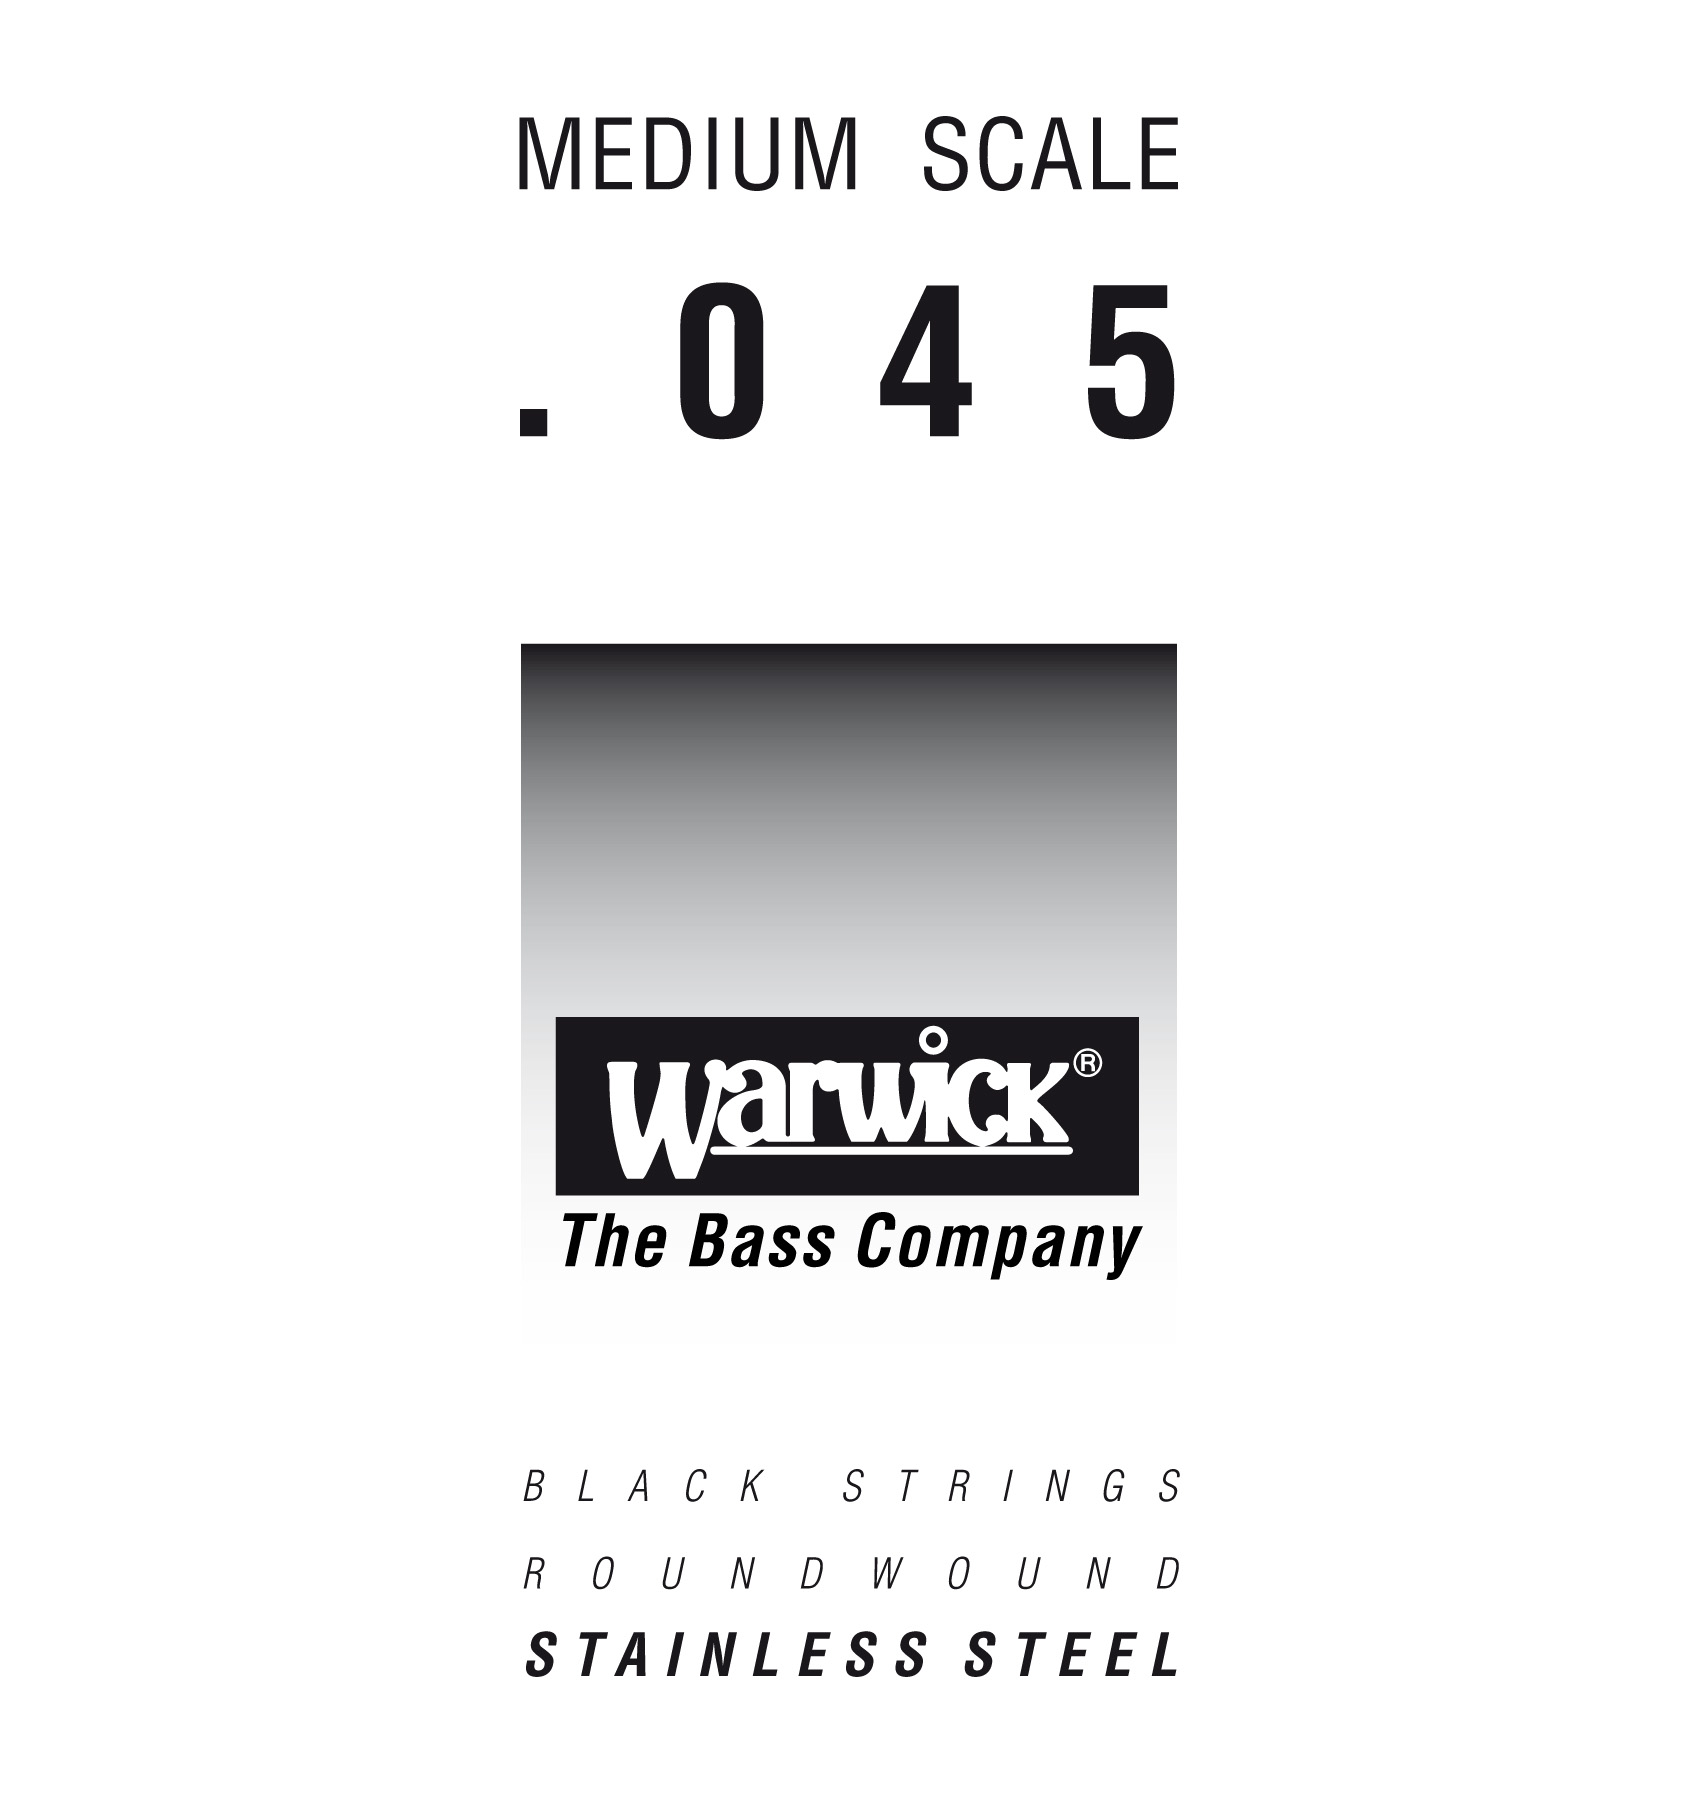 Warwick Black Label Bass Strings, Stainless Steel - Bass Single String, .045", Medium Scale